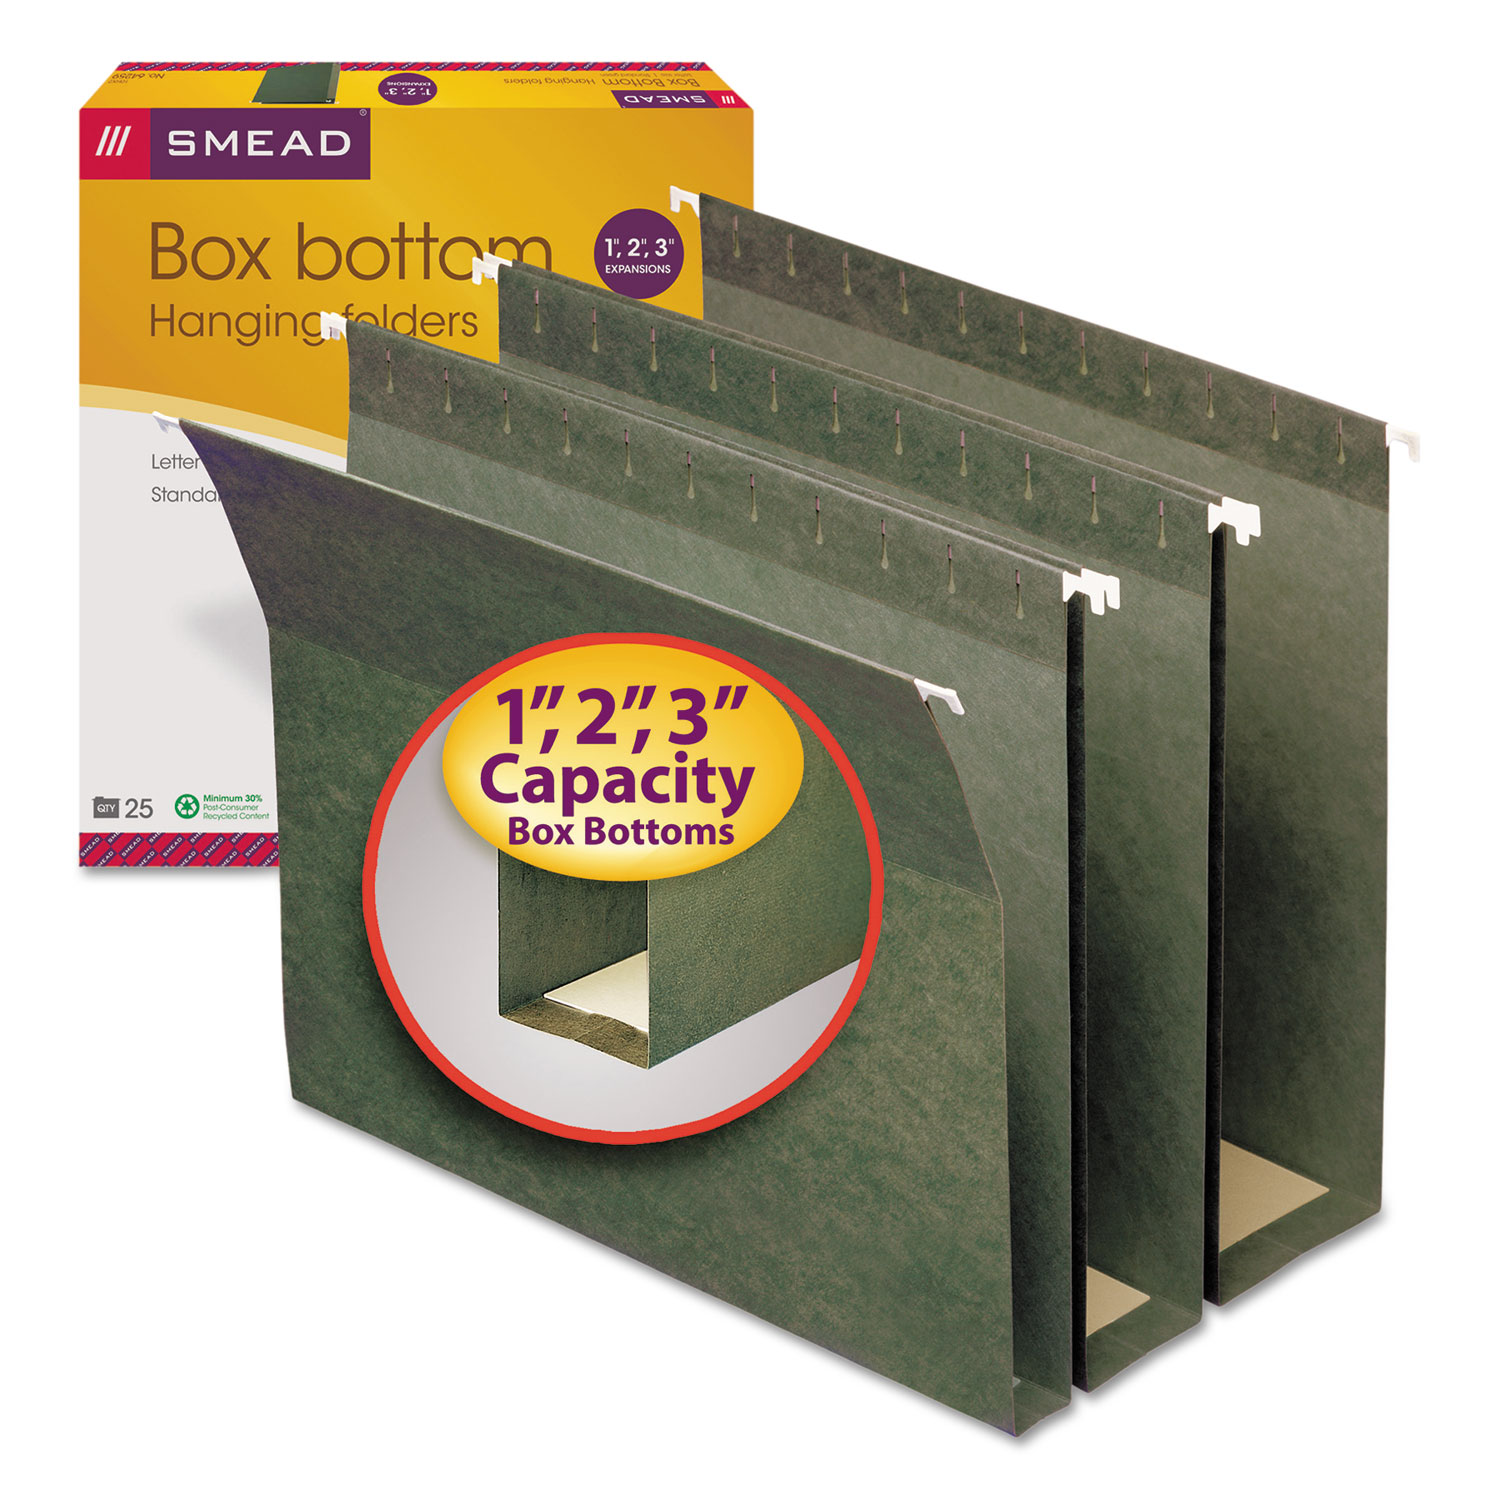  Smead 64260 Box Bottom Hanging File Folders, Letter Size, Standard Green, 25/Box (SMD64260) 